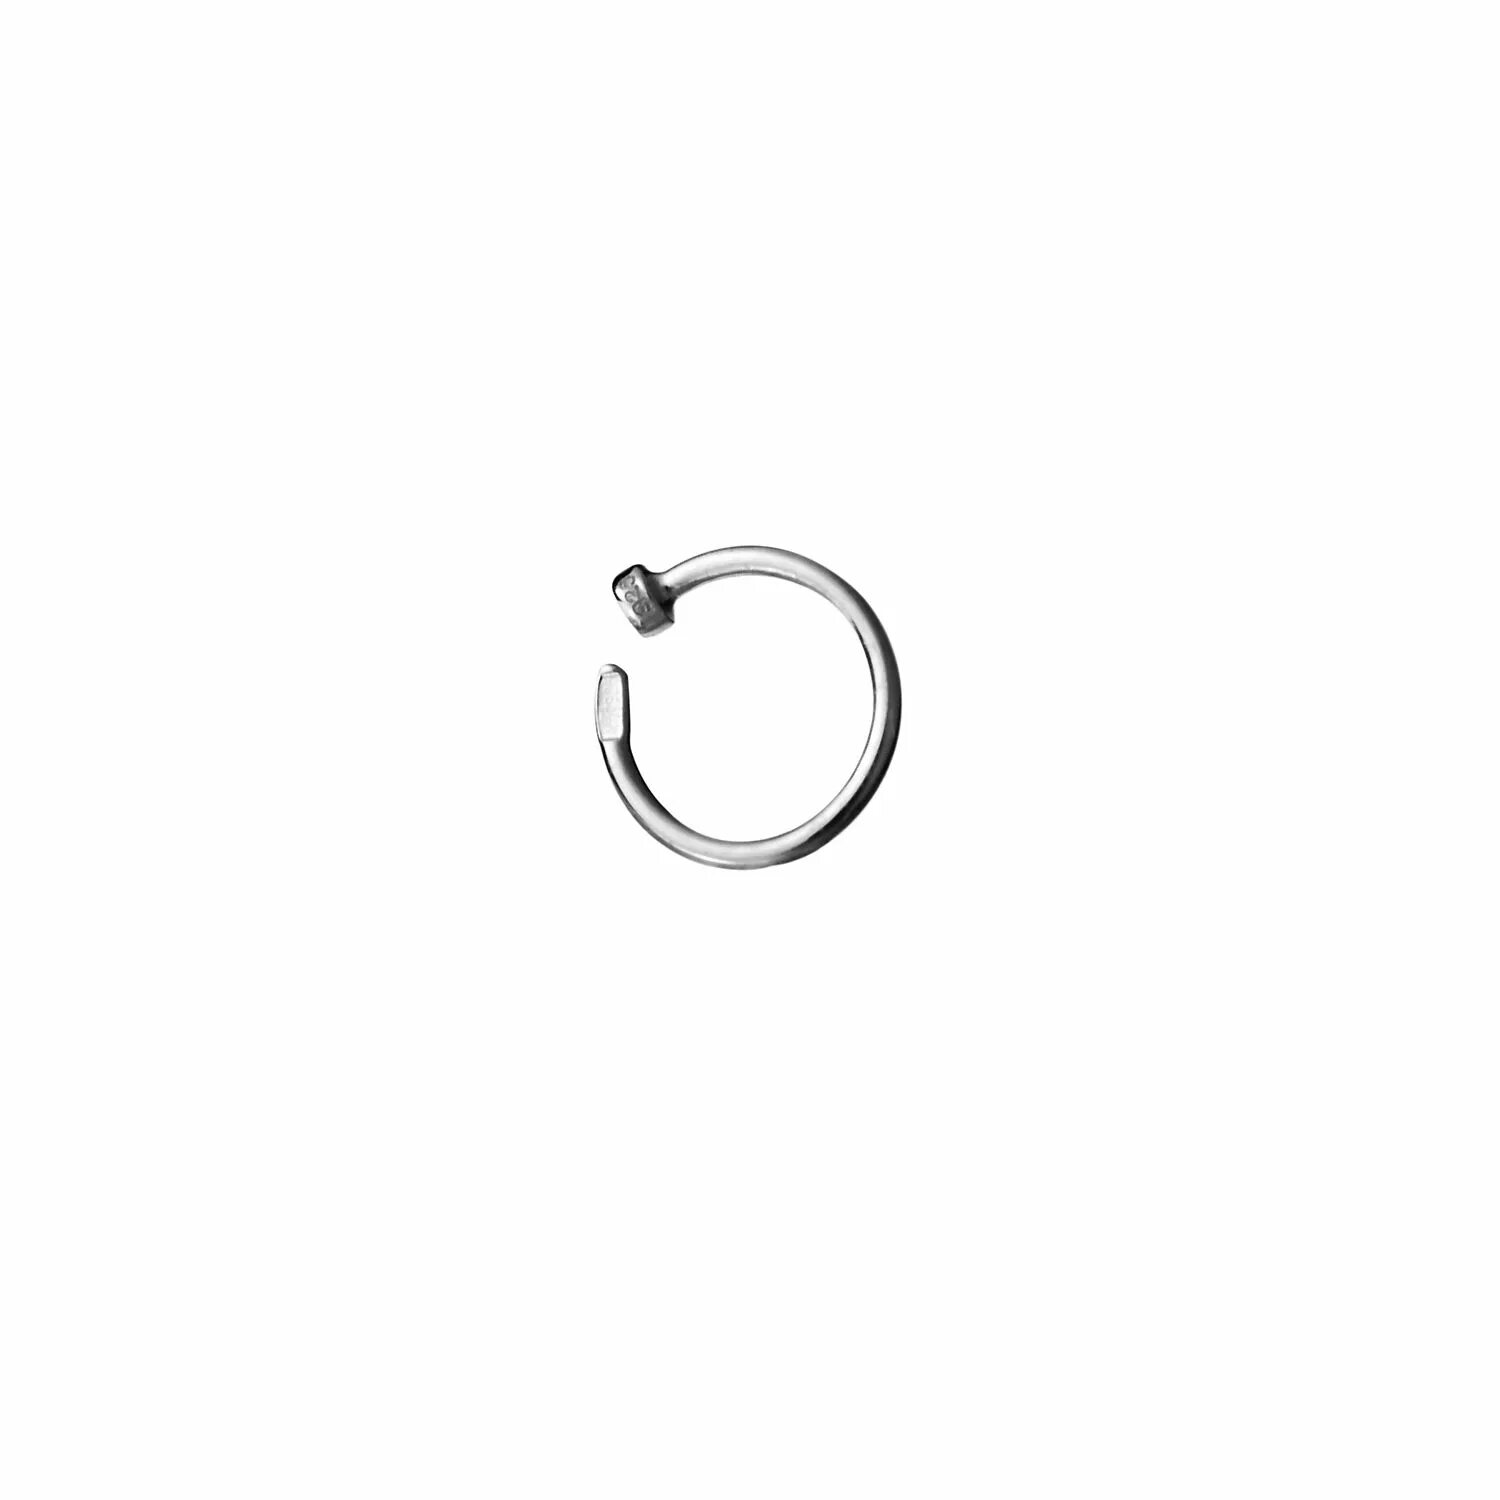 Сережки в нос кольцом. Мужская серьга кольцо 17мм серебро. Пирсинг носа кольцо сбоку. Кольцо кликер пирсинг 1 мм 10 мм. Пирсинг носа колечко сбоку.